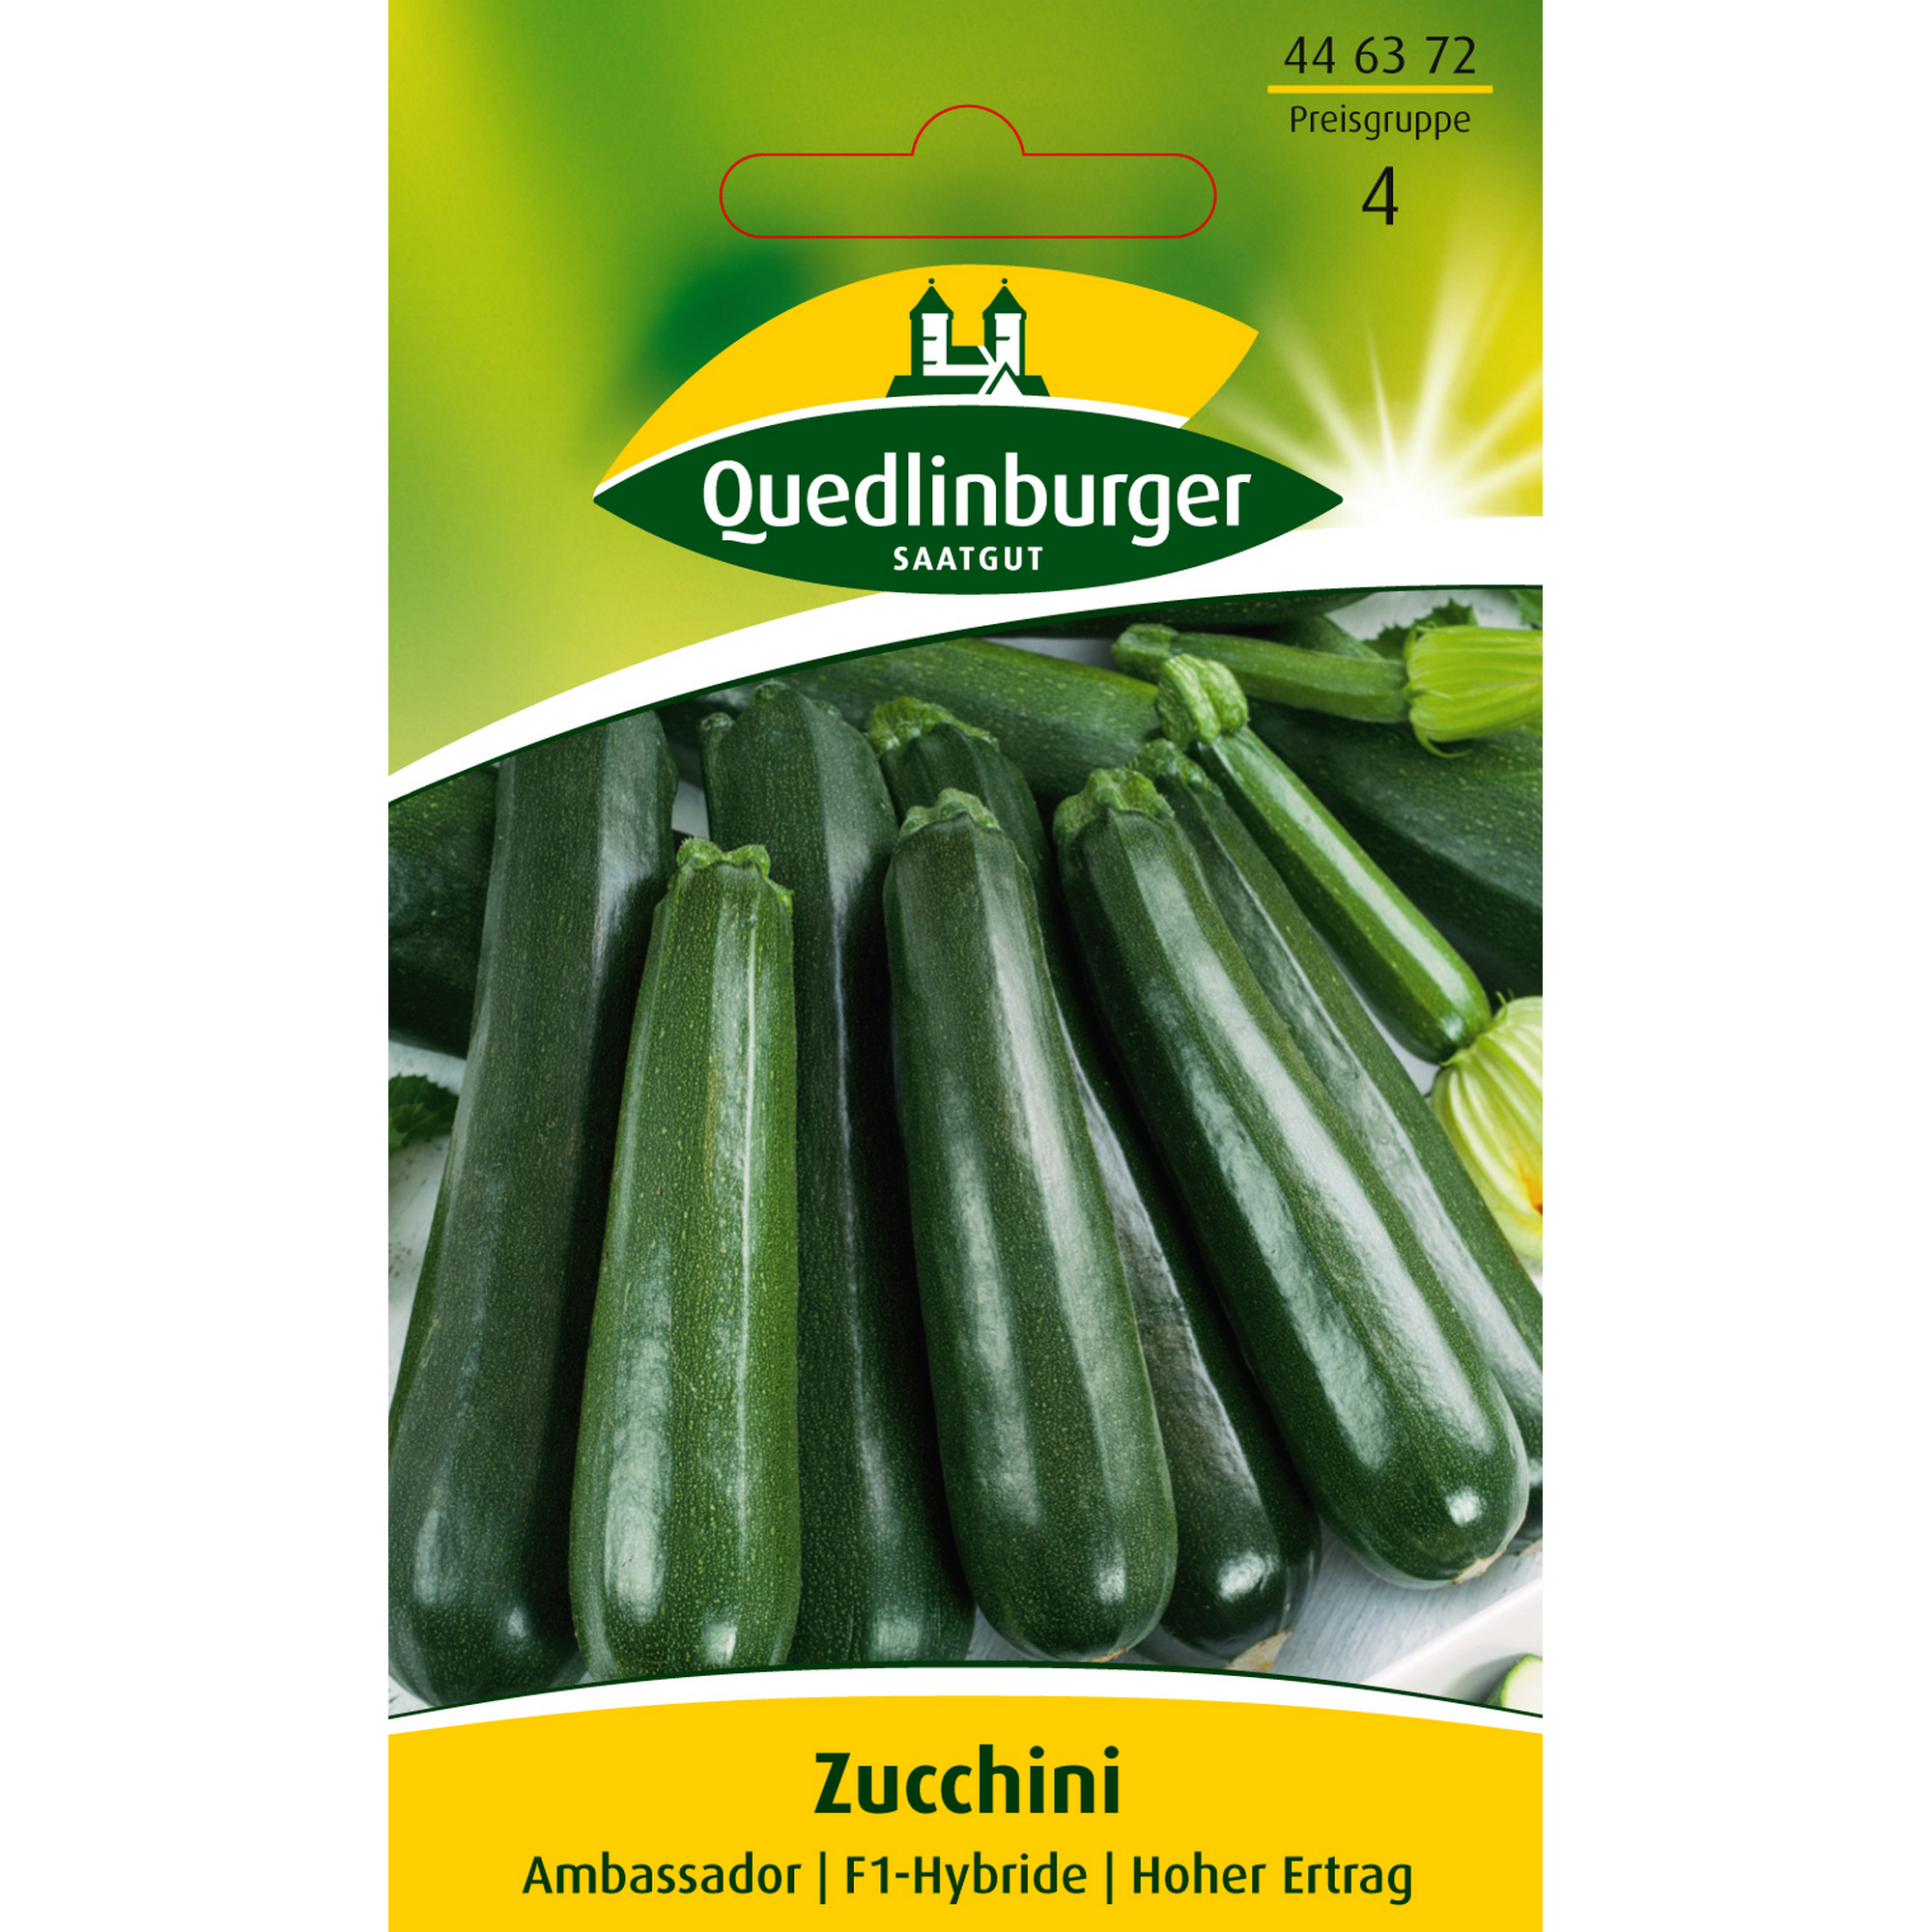 Zucchini 'Ambassador' + product picture